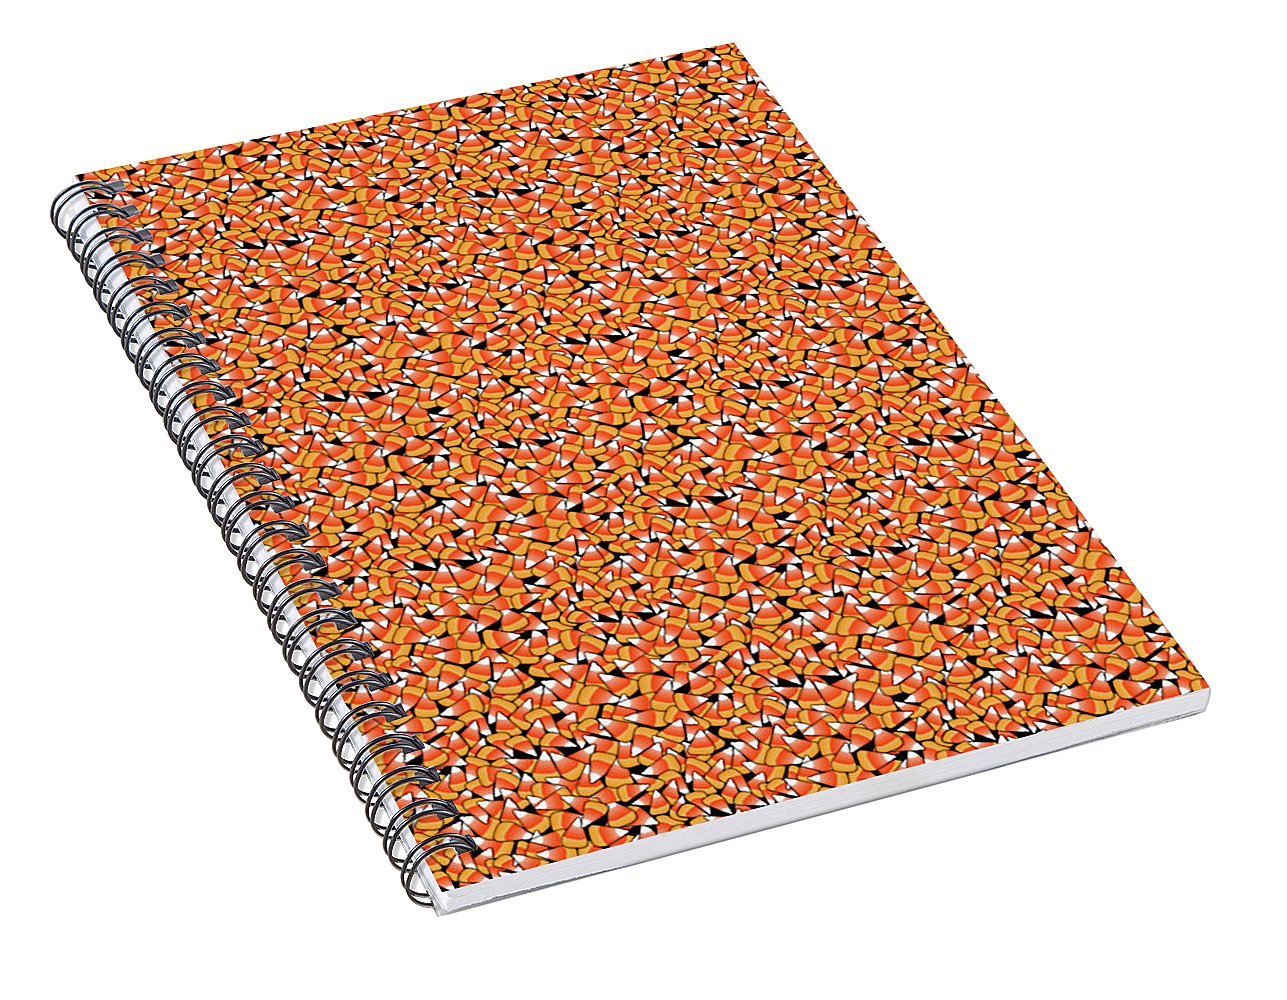 Fall Candy Corn Pattern - Spiral Notebook